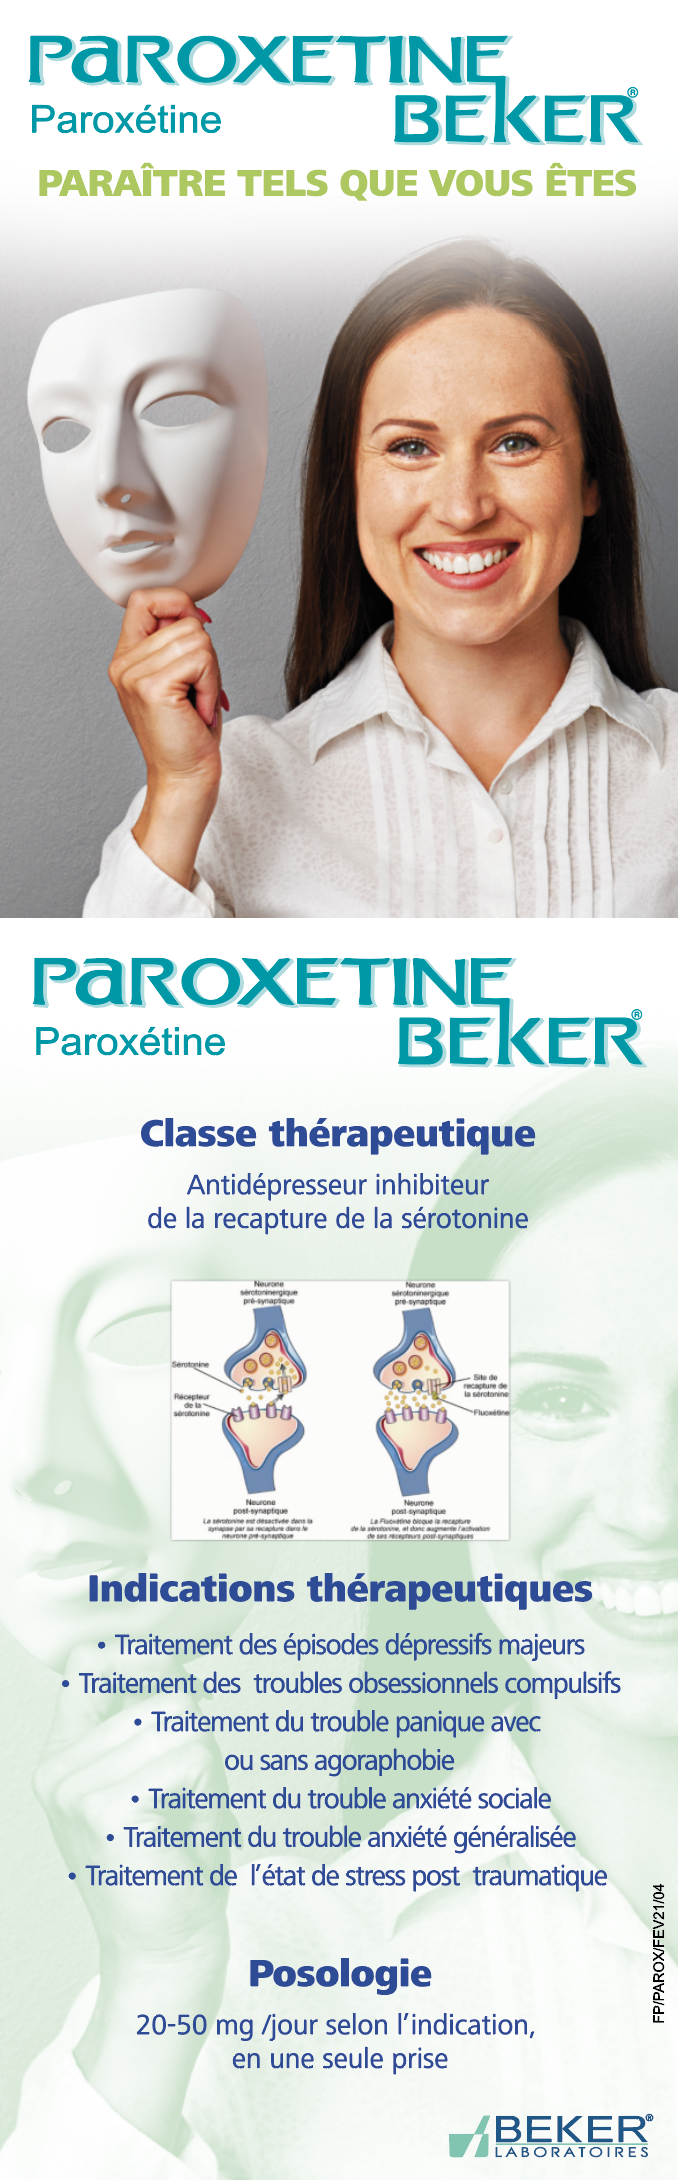 Paroxetine BEKER